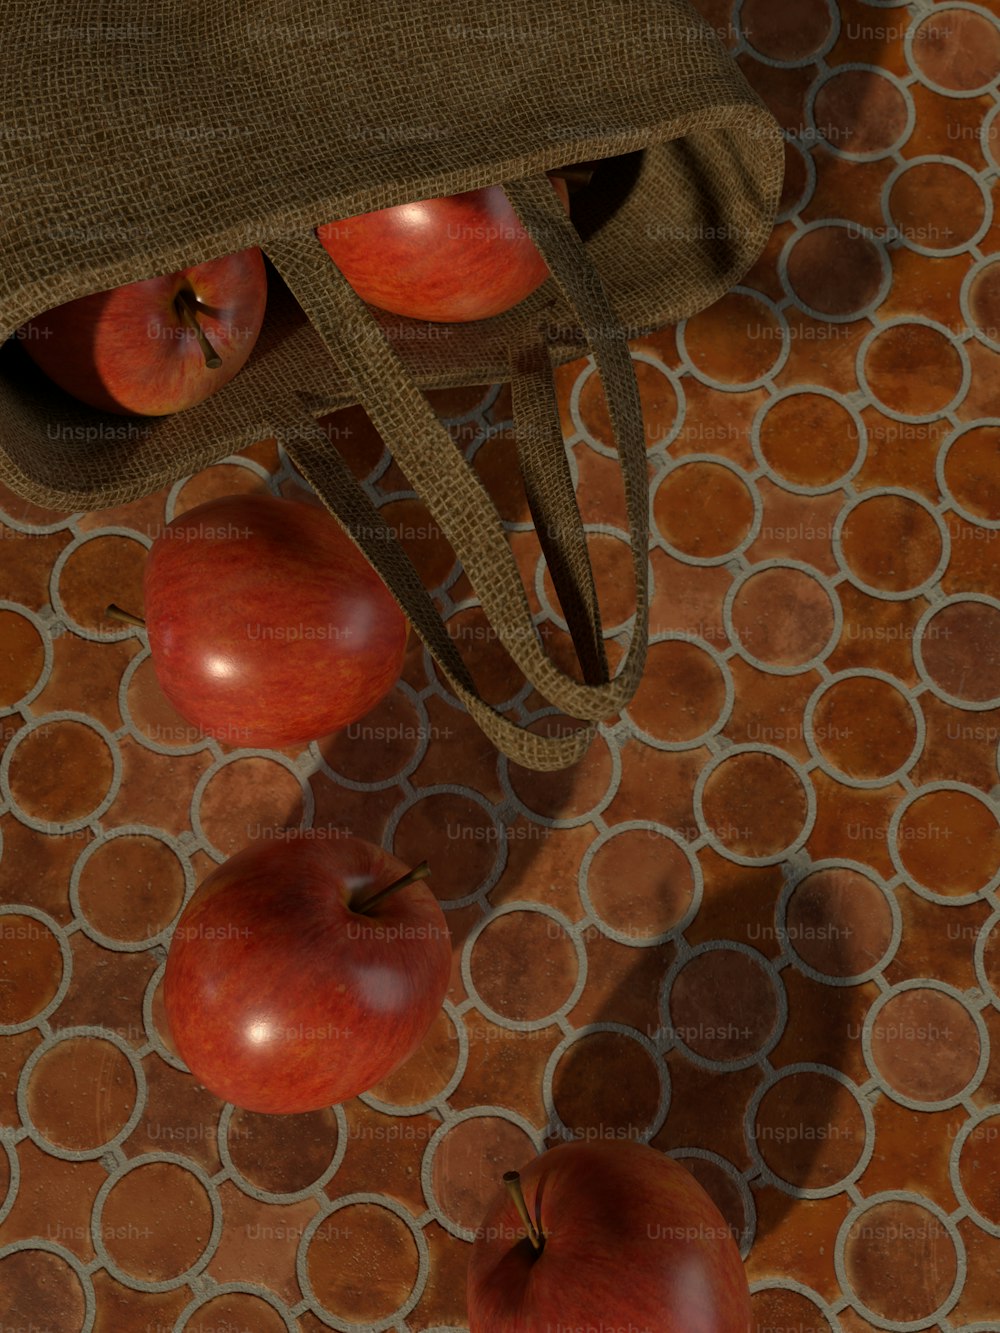 Un grupo de manzanas sentadas encima de un suelo de baldosas